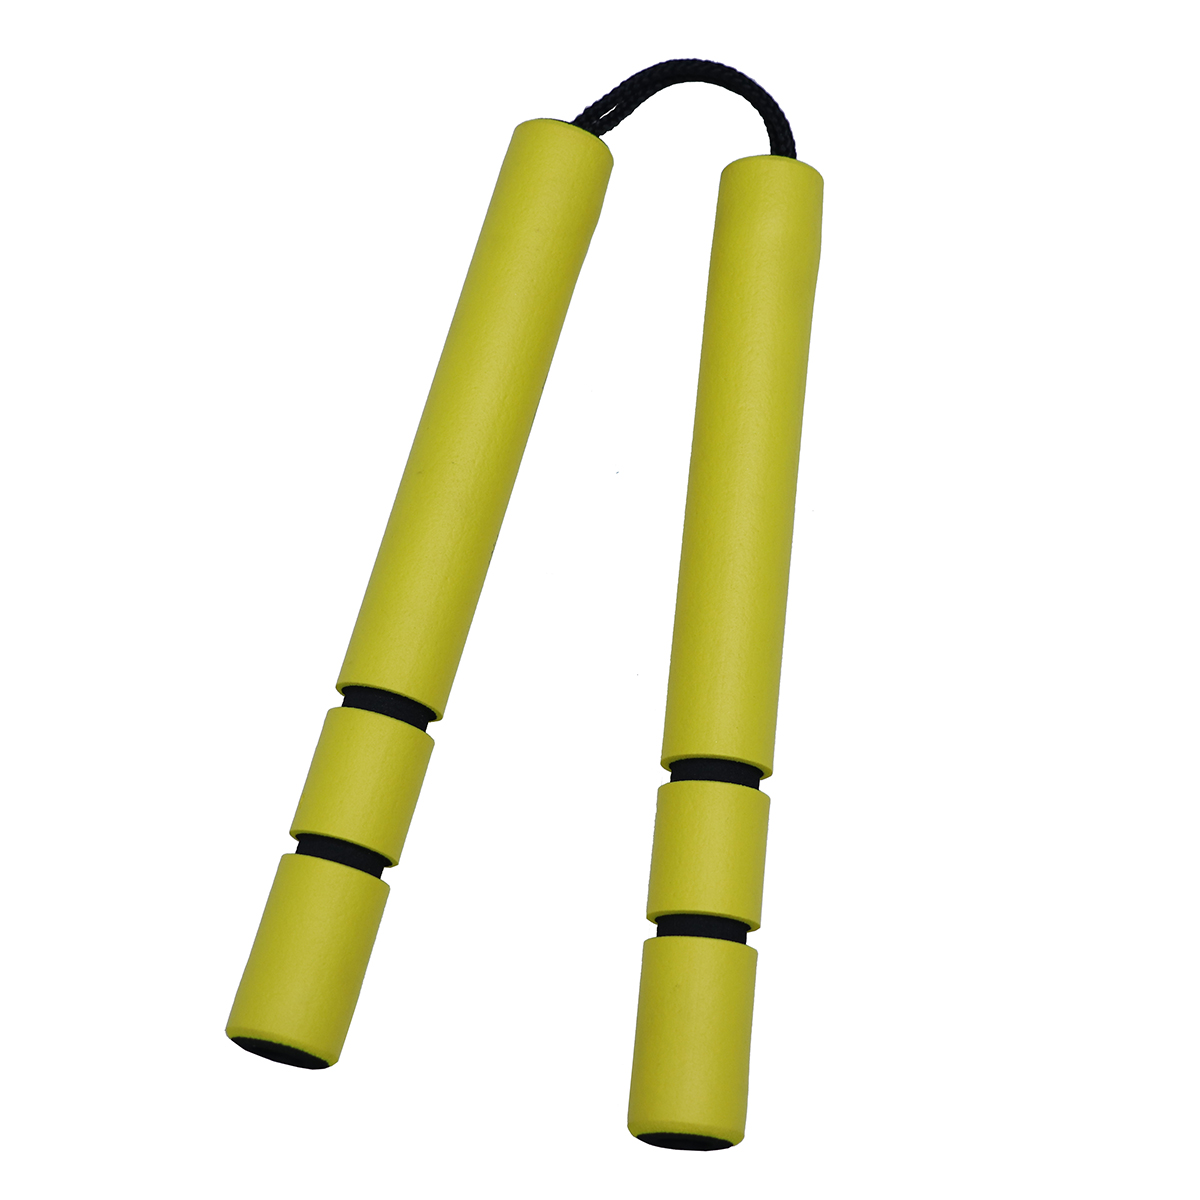 NR-028: Foam Nunchaku Cord With Grip : Yellow grips ( E129) - Click Image to Close